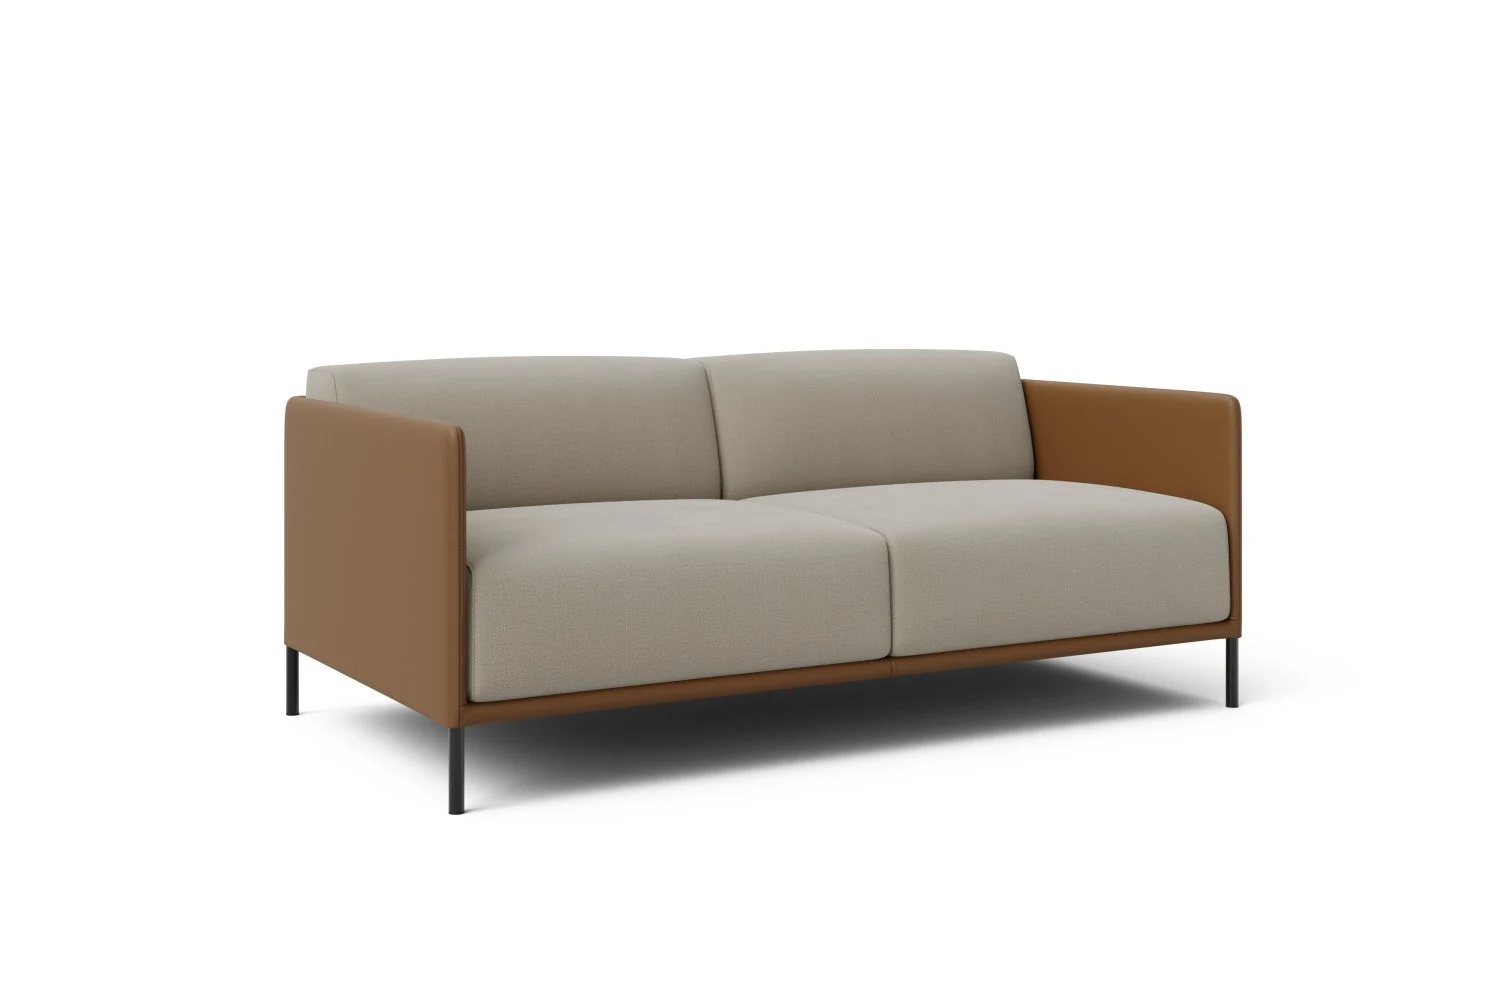 marsalis bicolore 3 seater sofa bed Milano bedding FMDESIGN